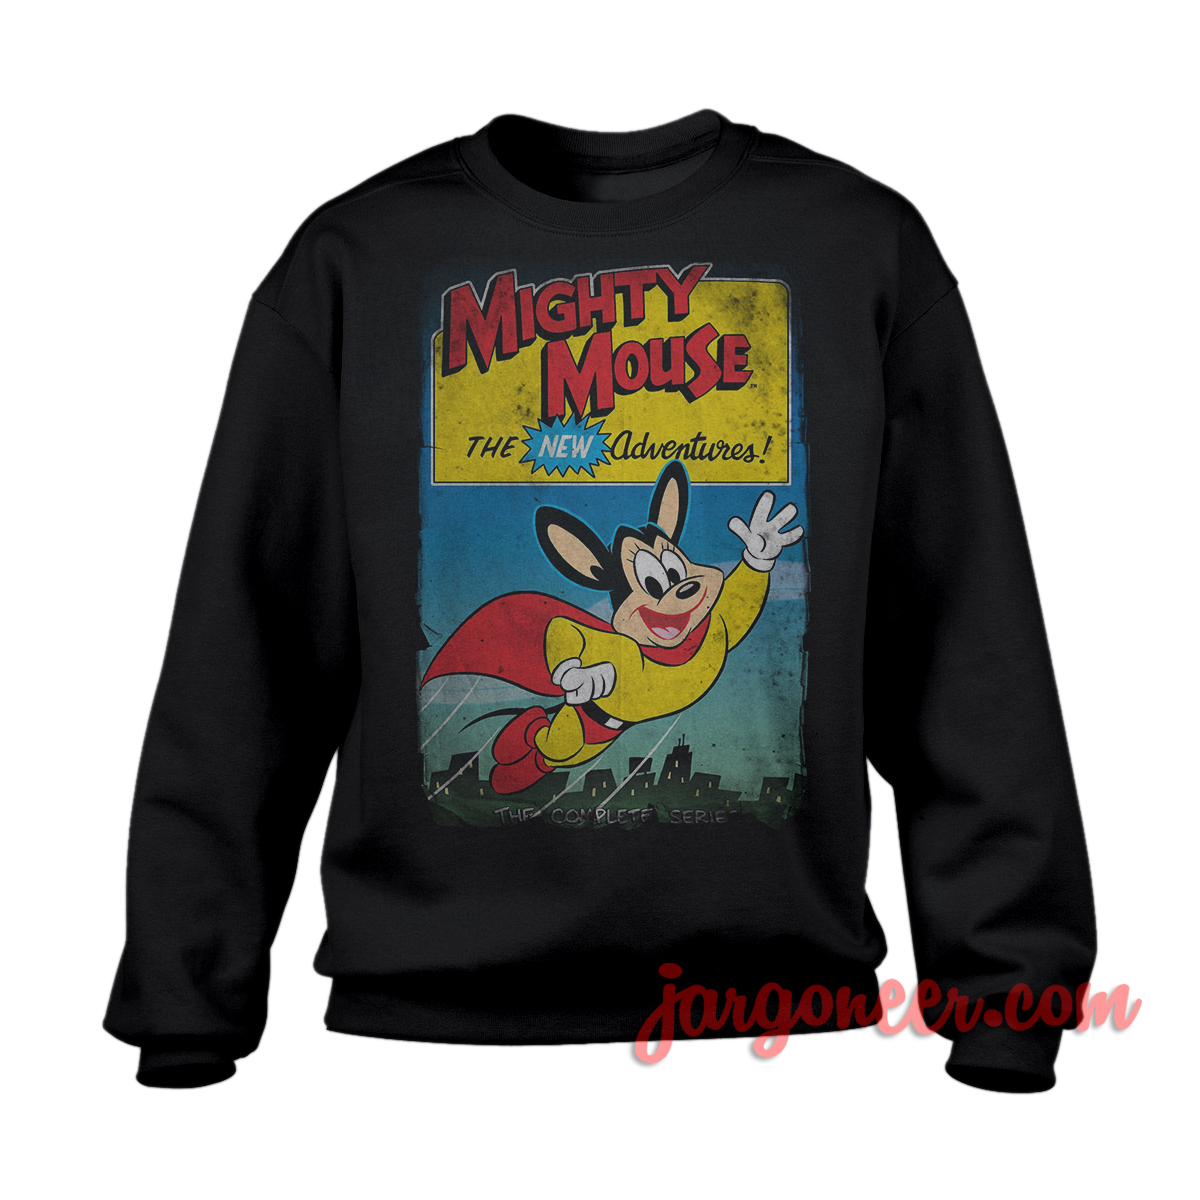 Mighty Mouse Black SS - Shop Unique Graphic Cool Shirt Designs